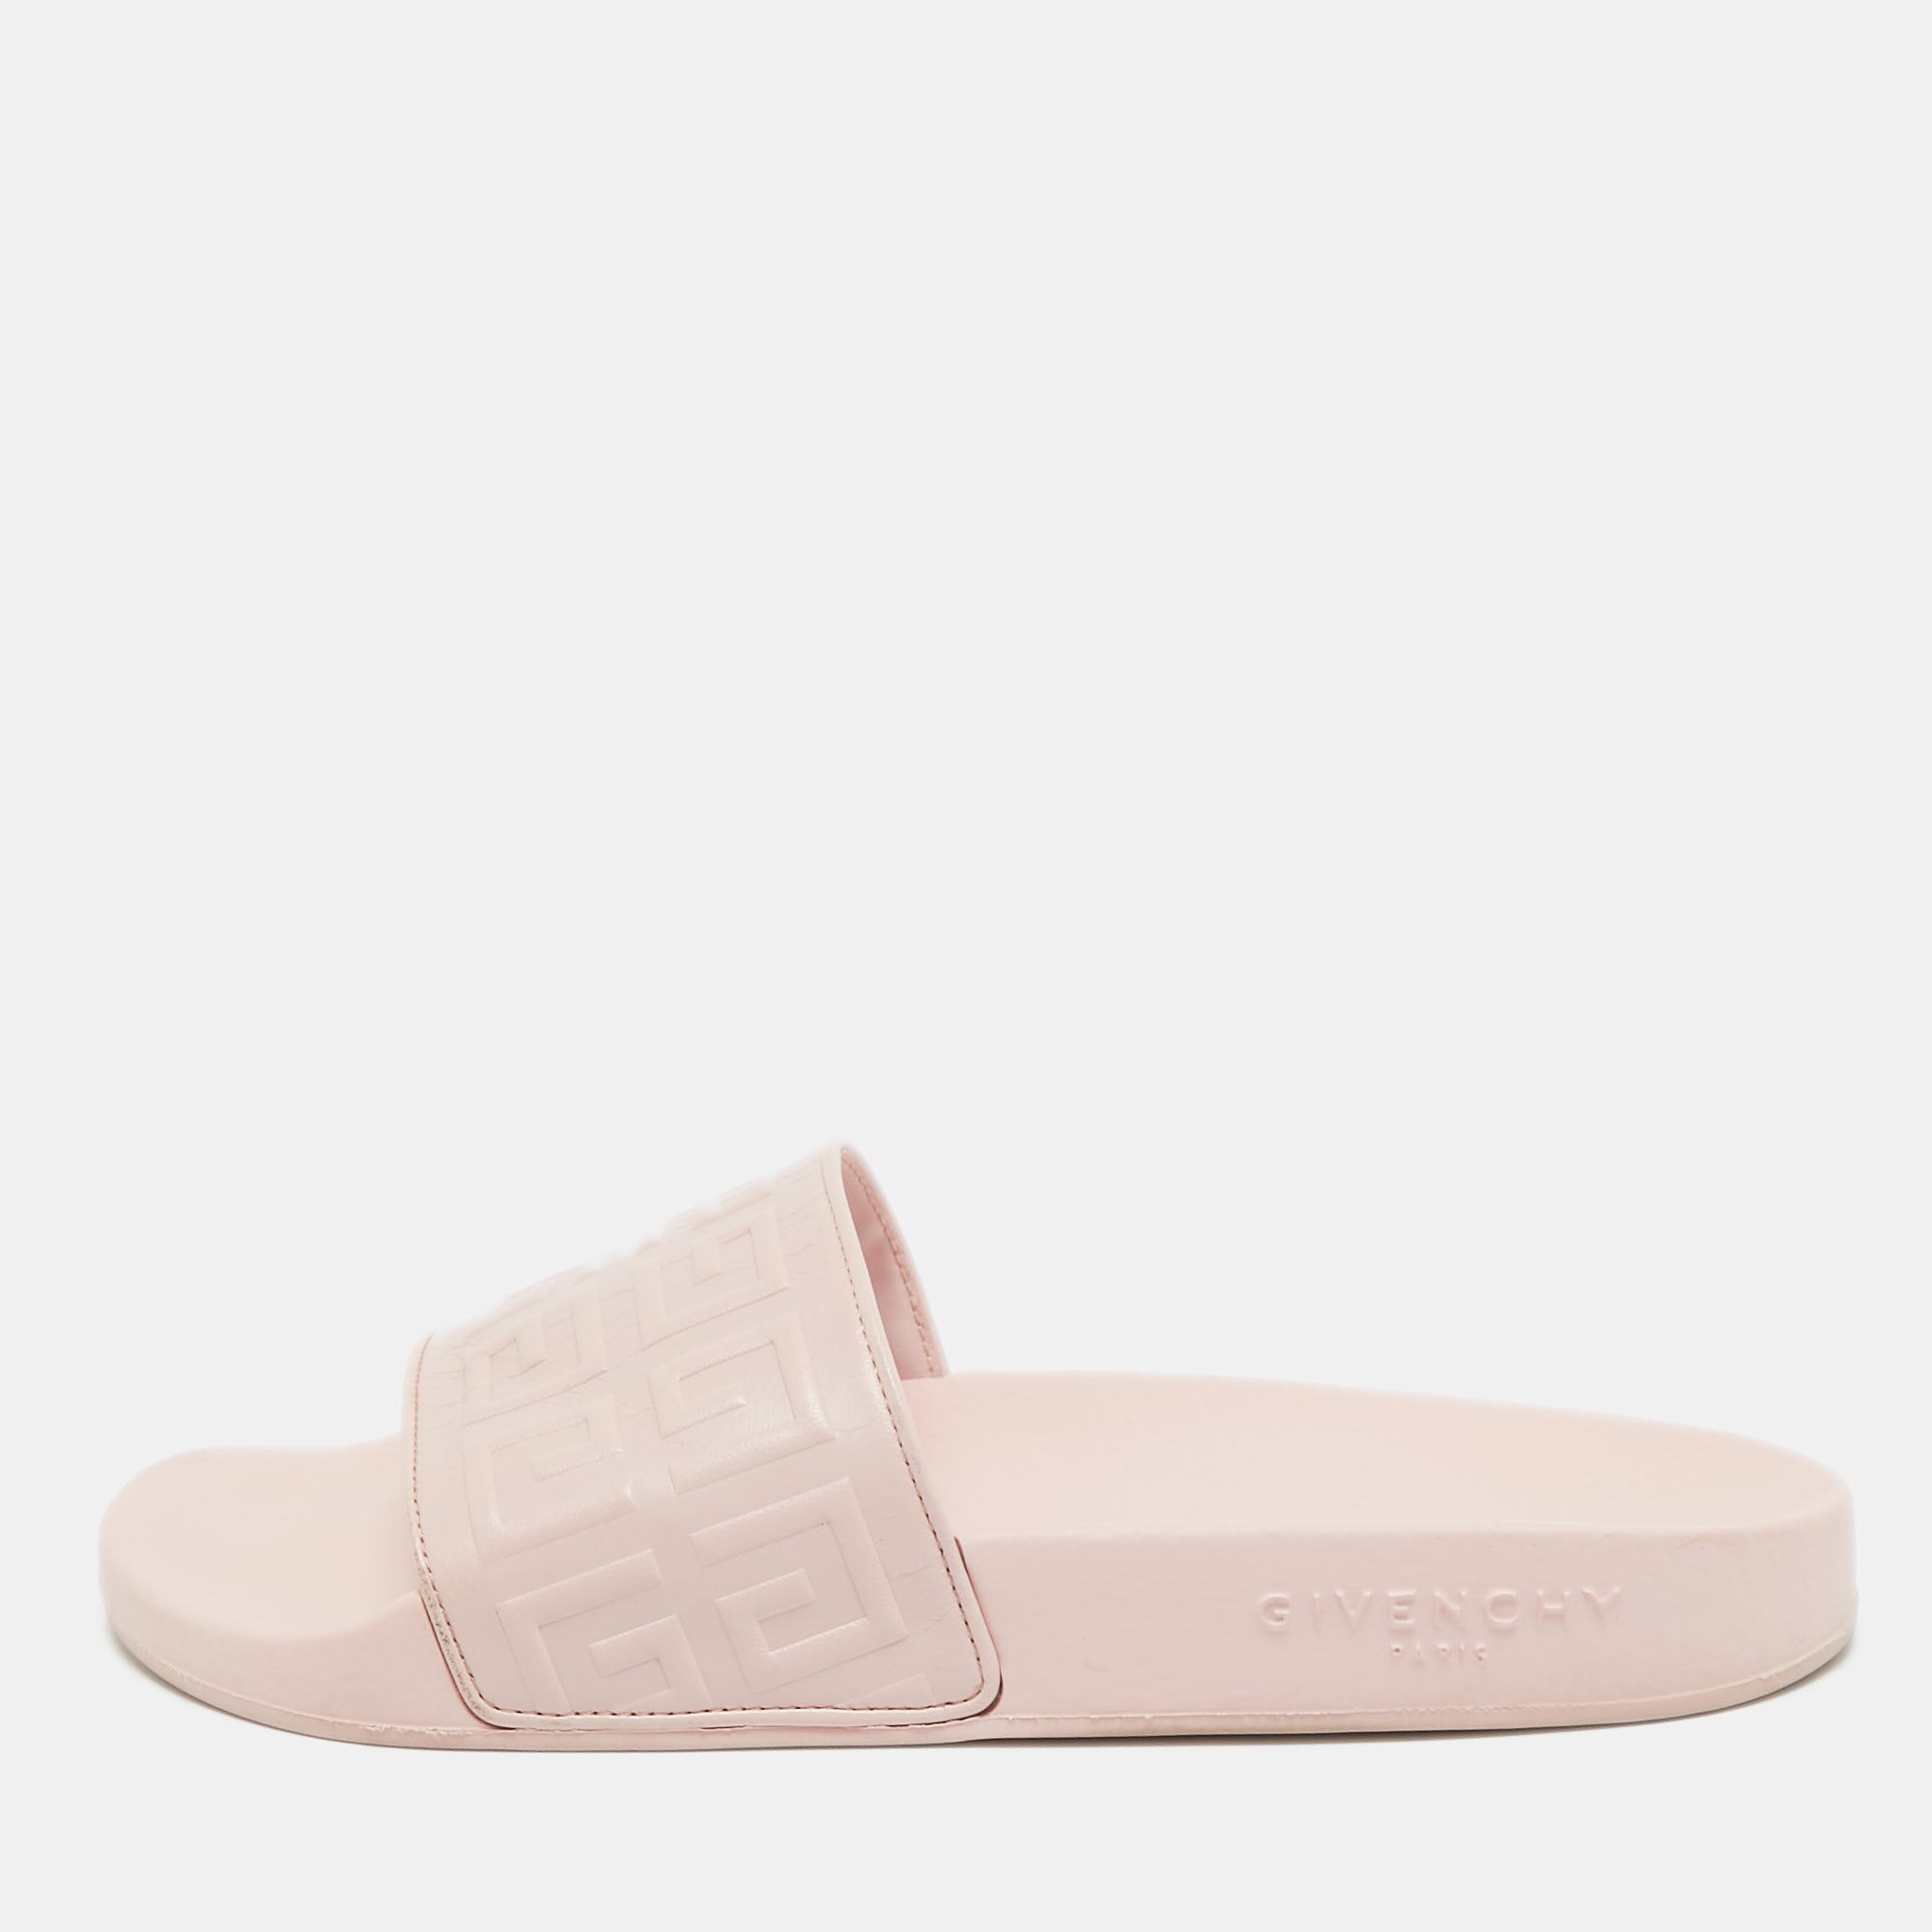 Givenchy pink rubber logo flat slides size 38